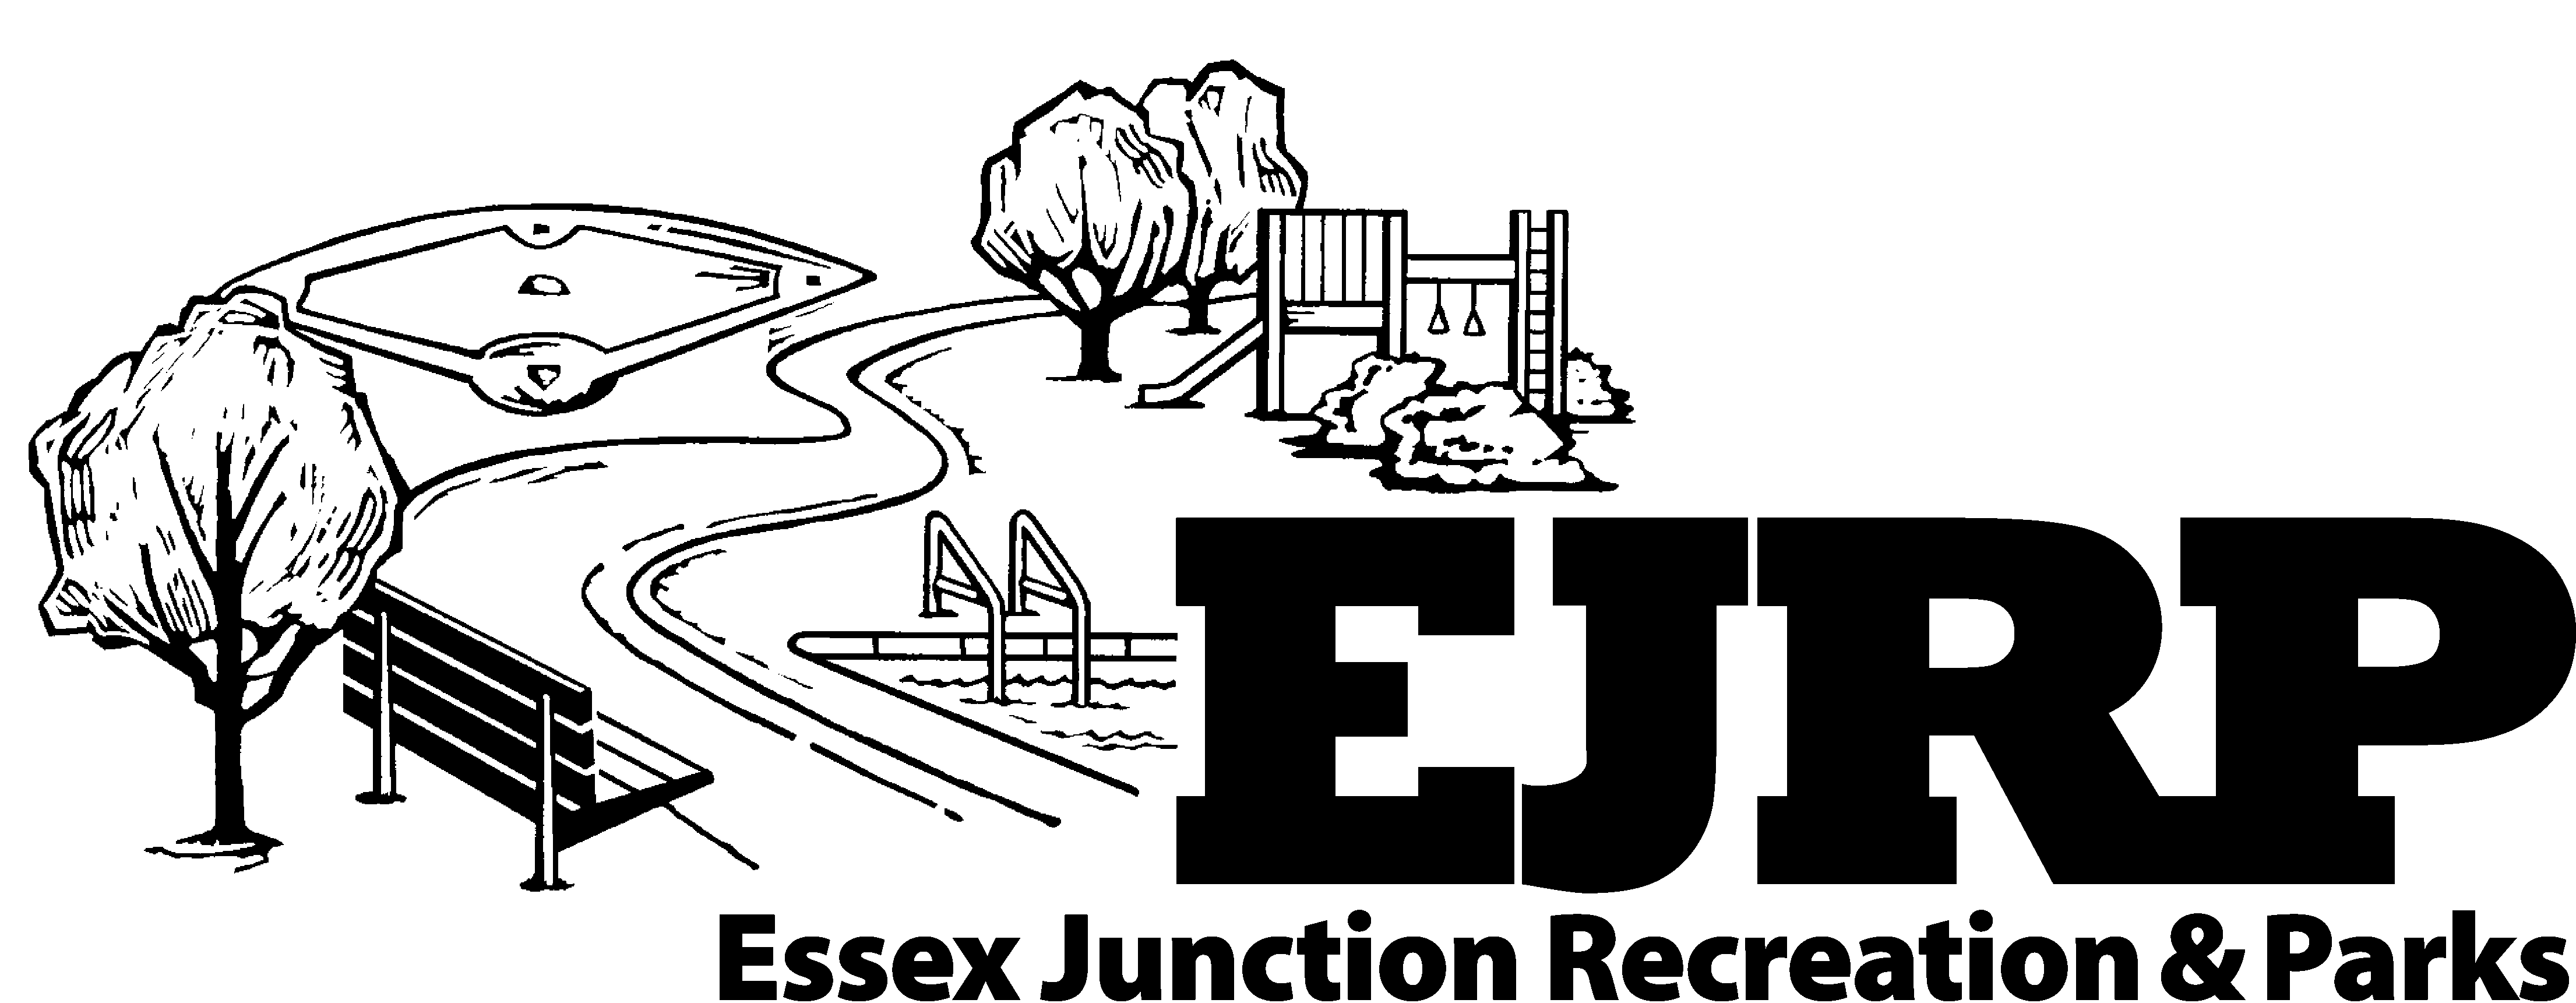 Essex Junction Recreation & Parks